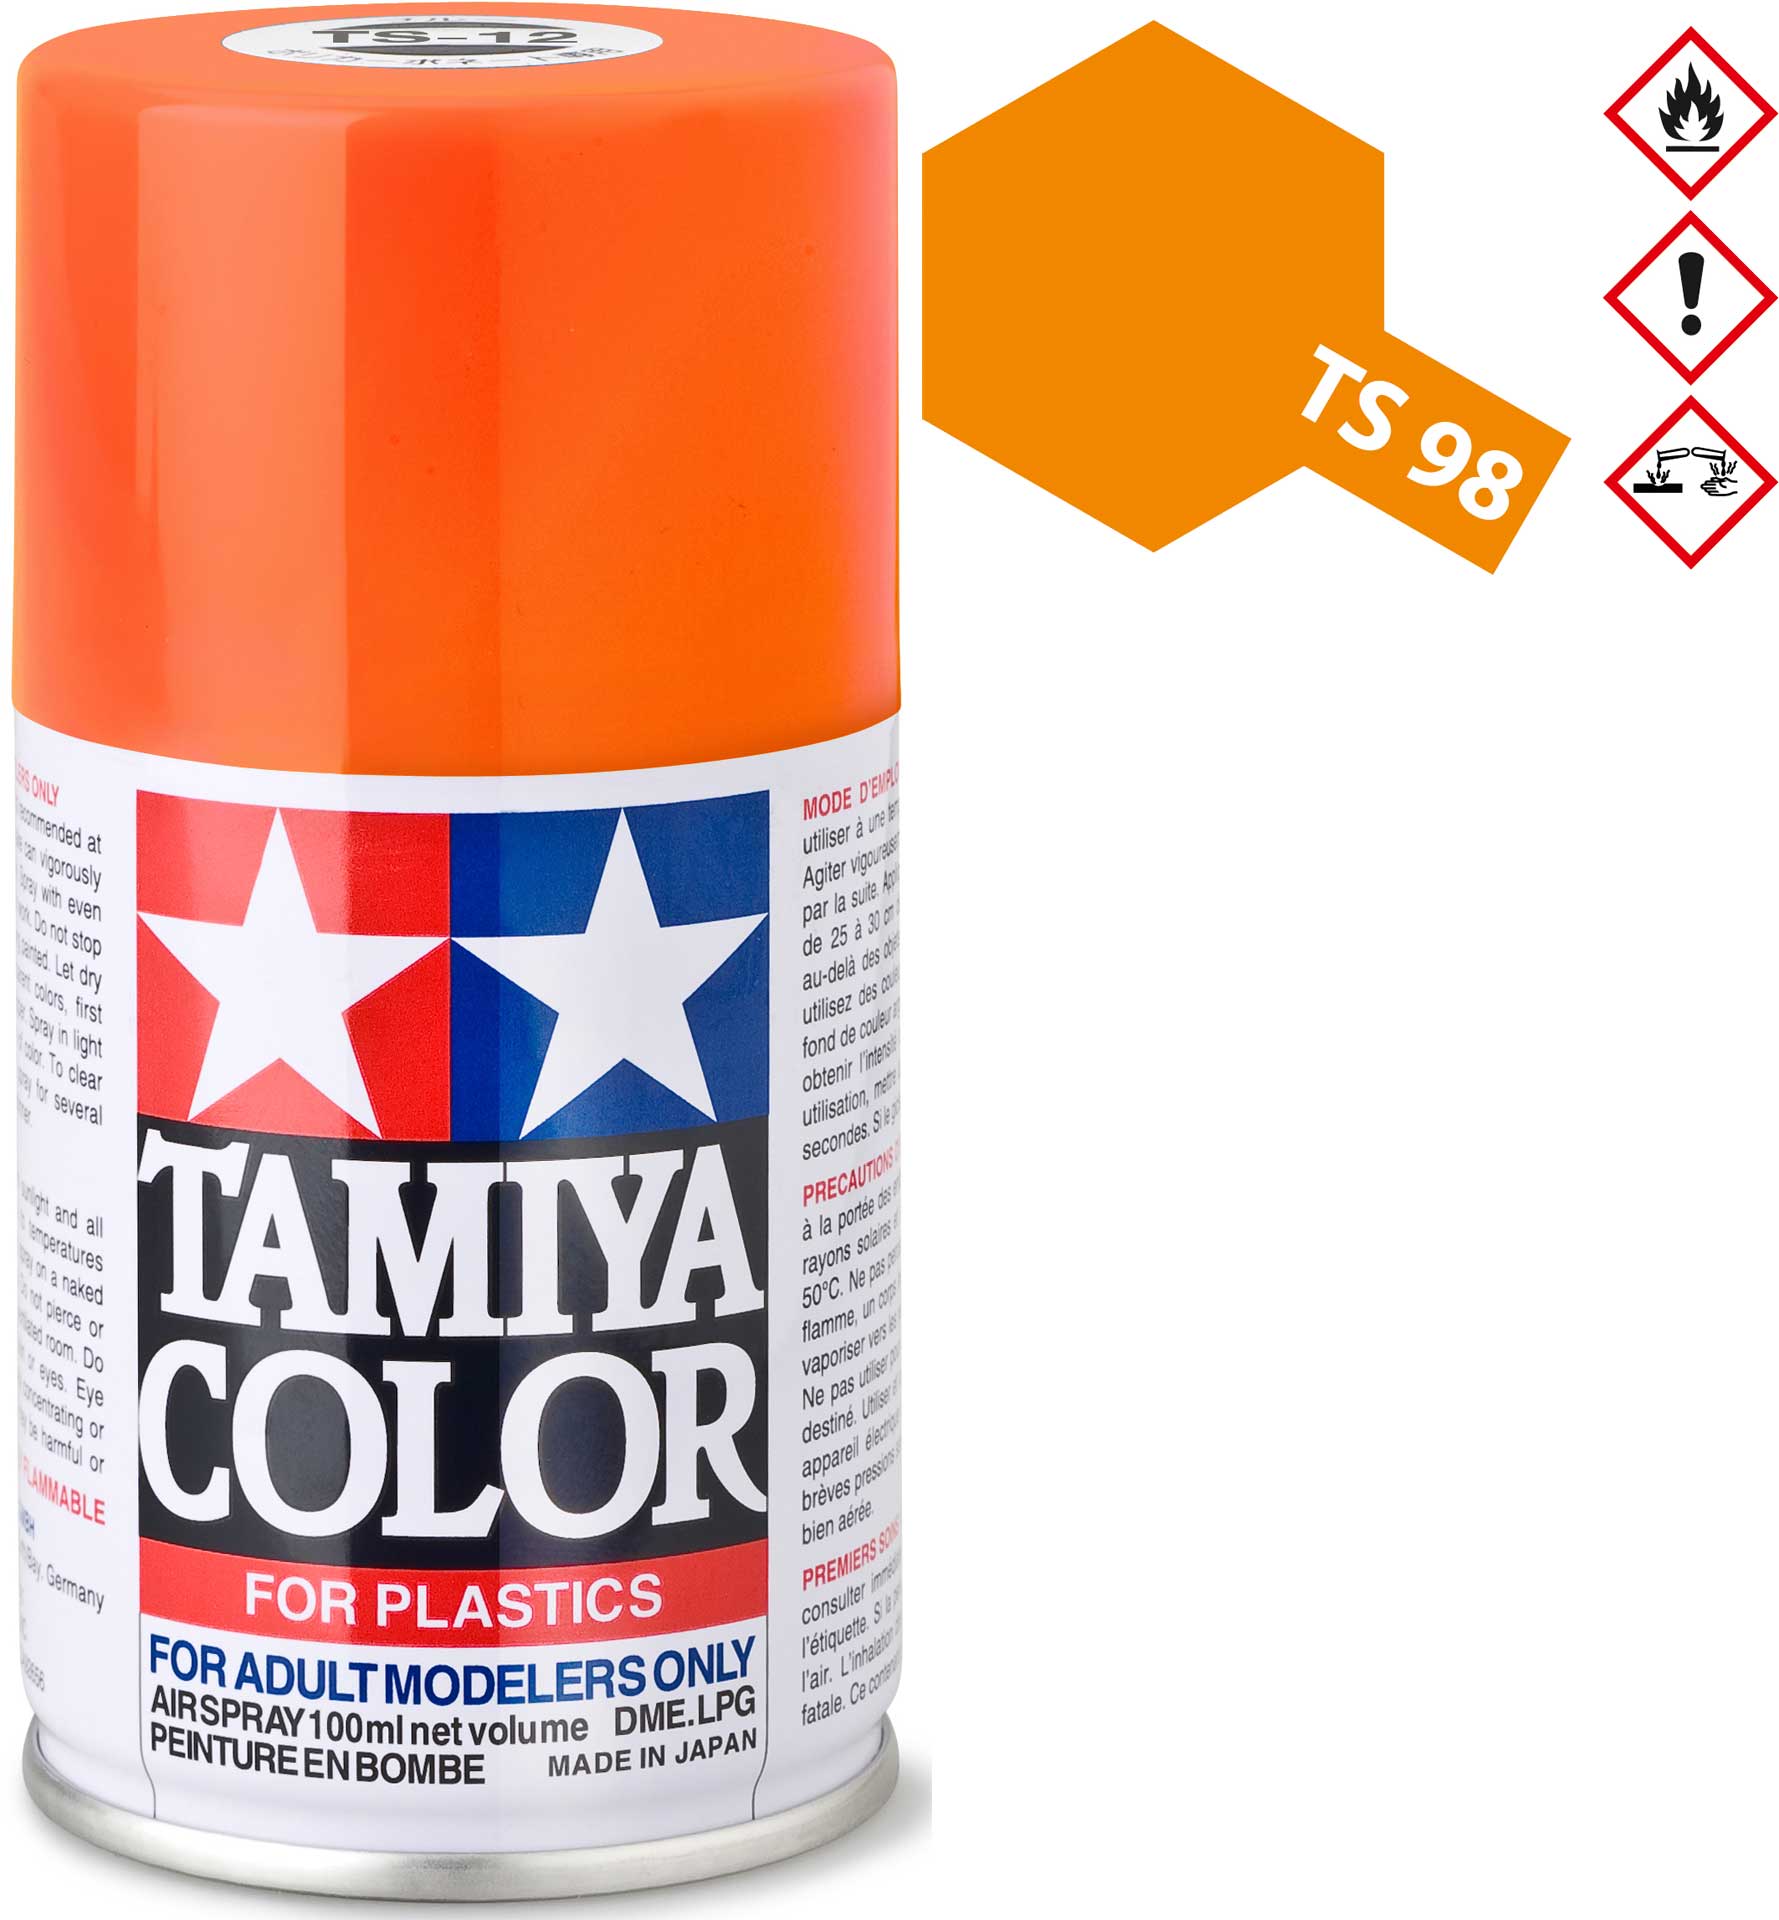 TAMIYA TS-98 Orange pur brillant Plastique Spray 100ml